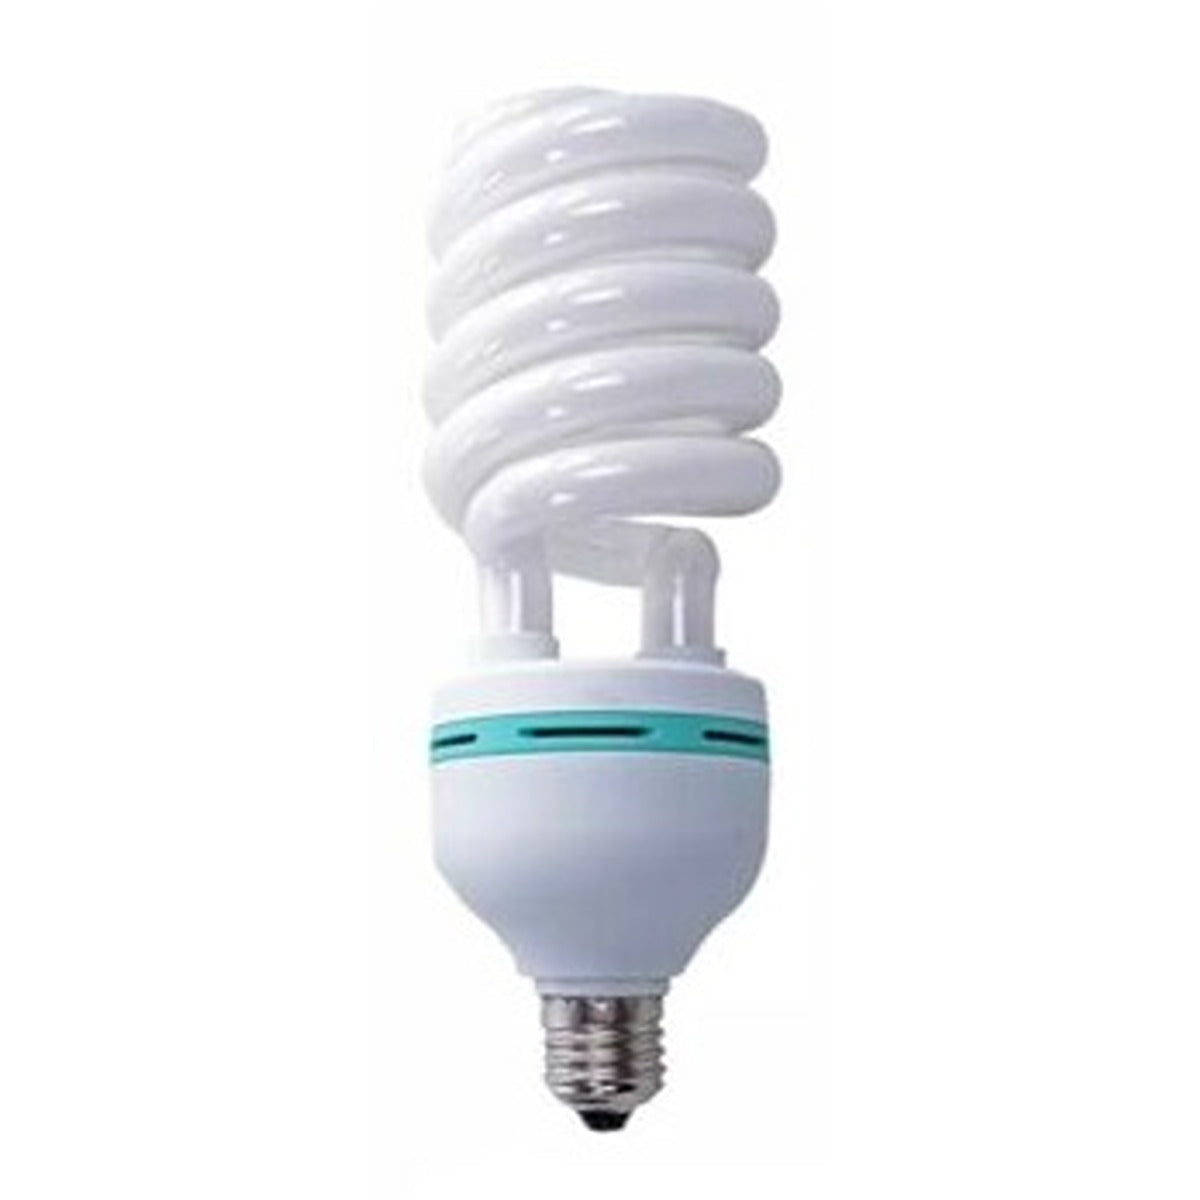 Semco - Energy Saving Light Bulb - 40W - Continental Food Store